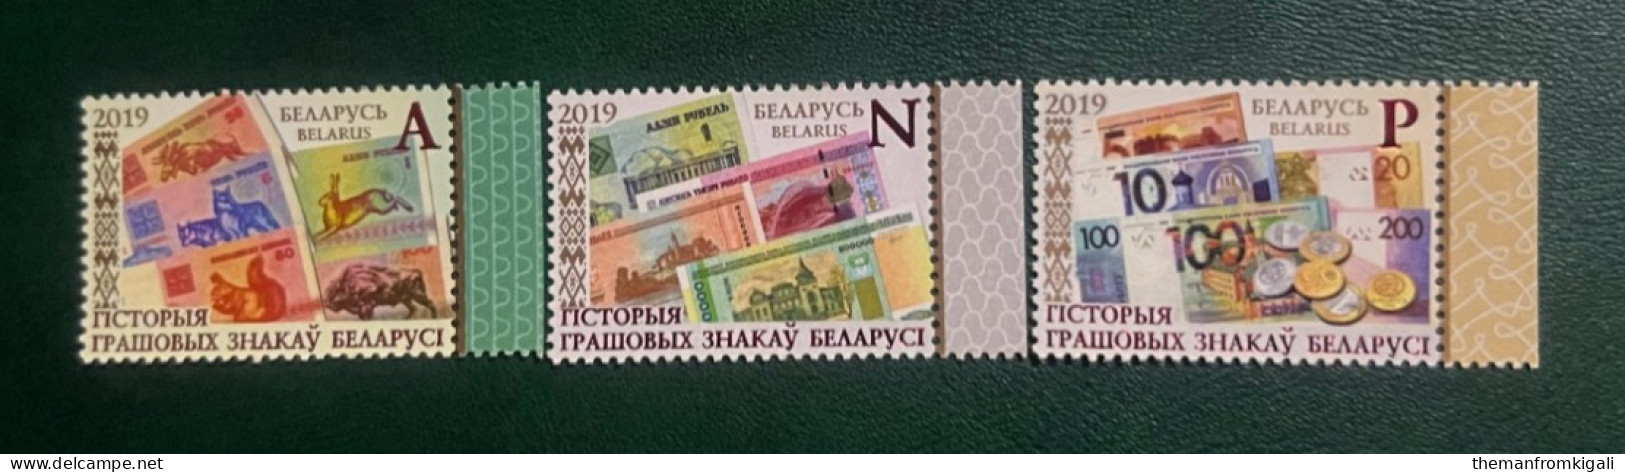 Belarus 2019 - History Of Belarus Banknotes. - Belarus